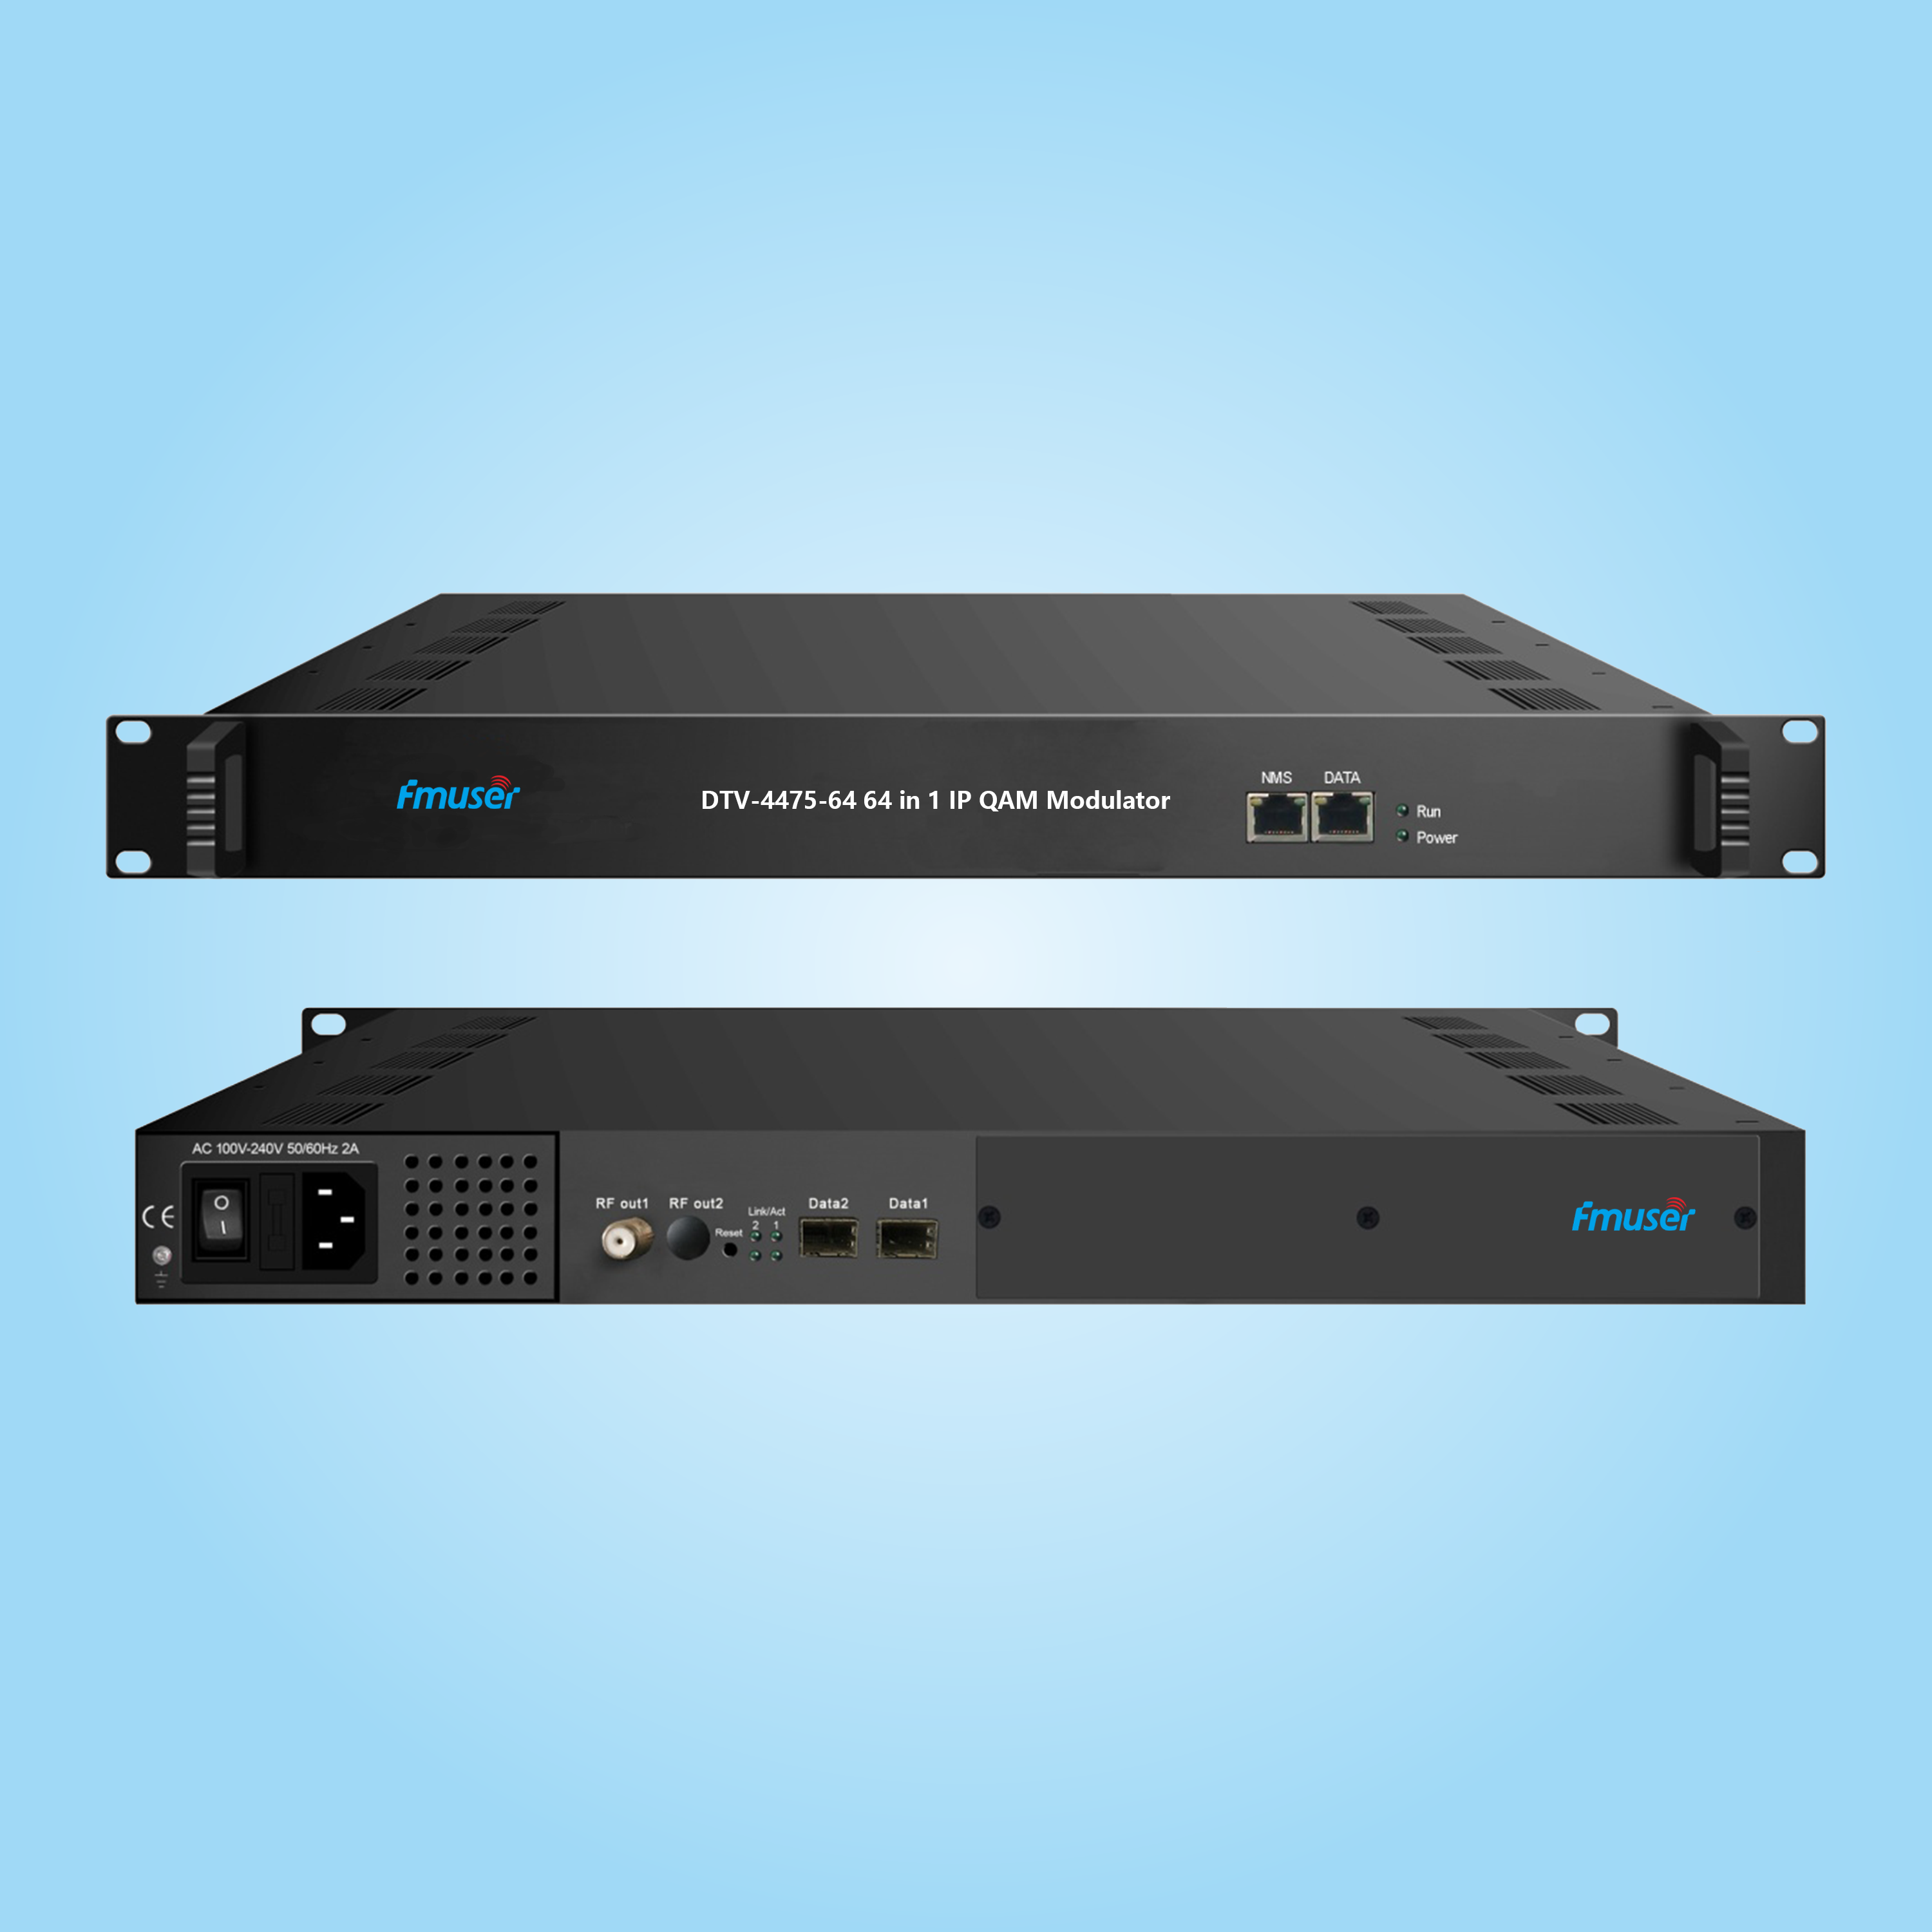 DTV-4475-64 64 in 1 IP QAM Modulator